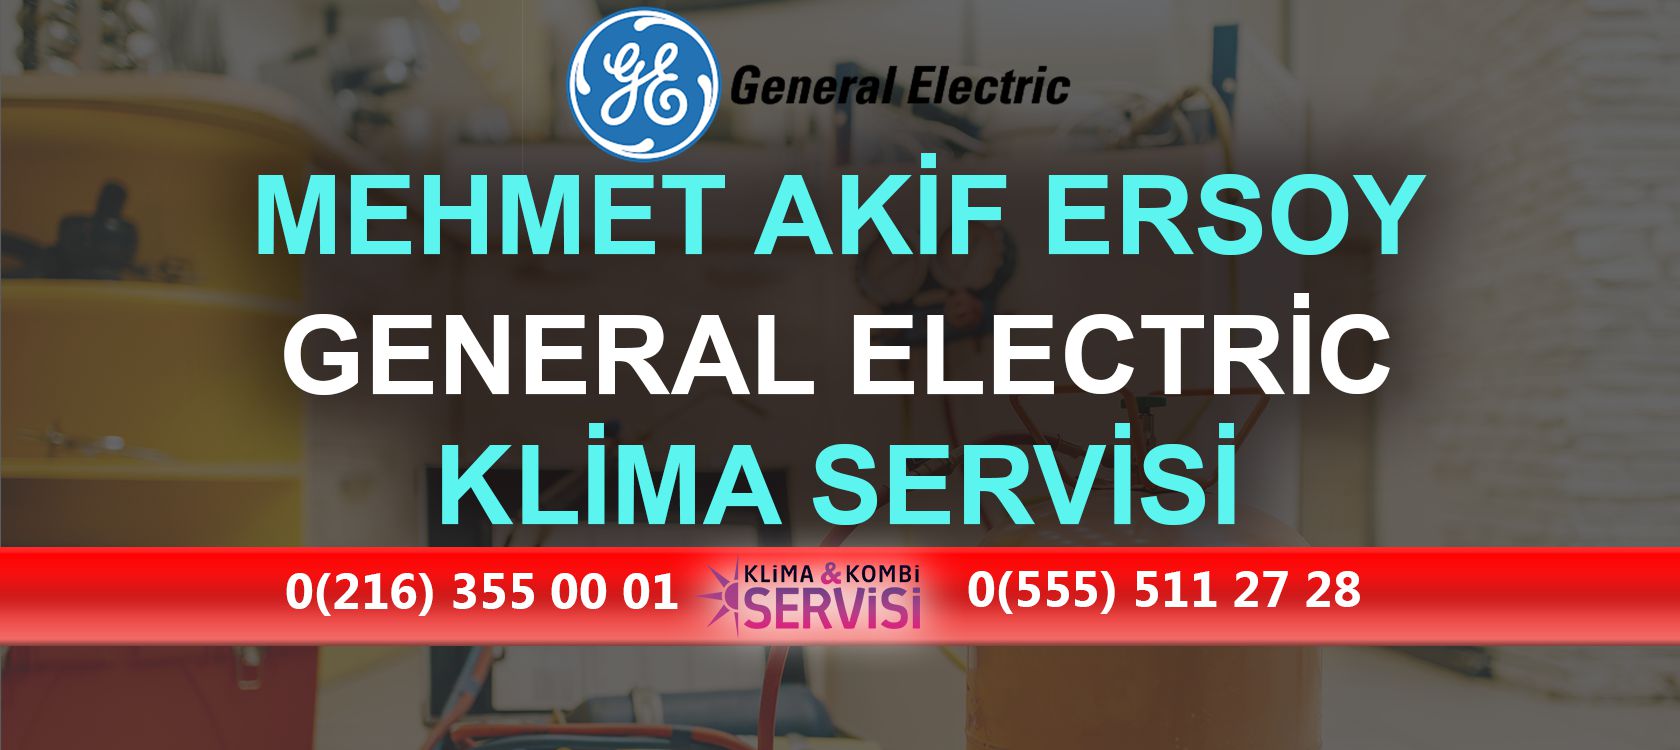 Mehmet Akif Ersoy General Electric Klima Servisi